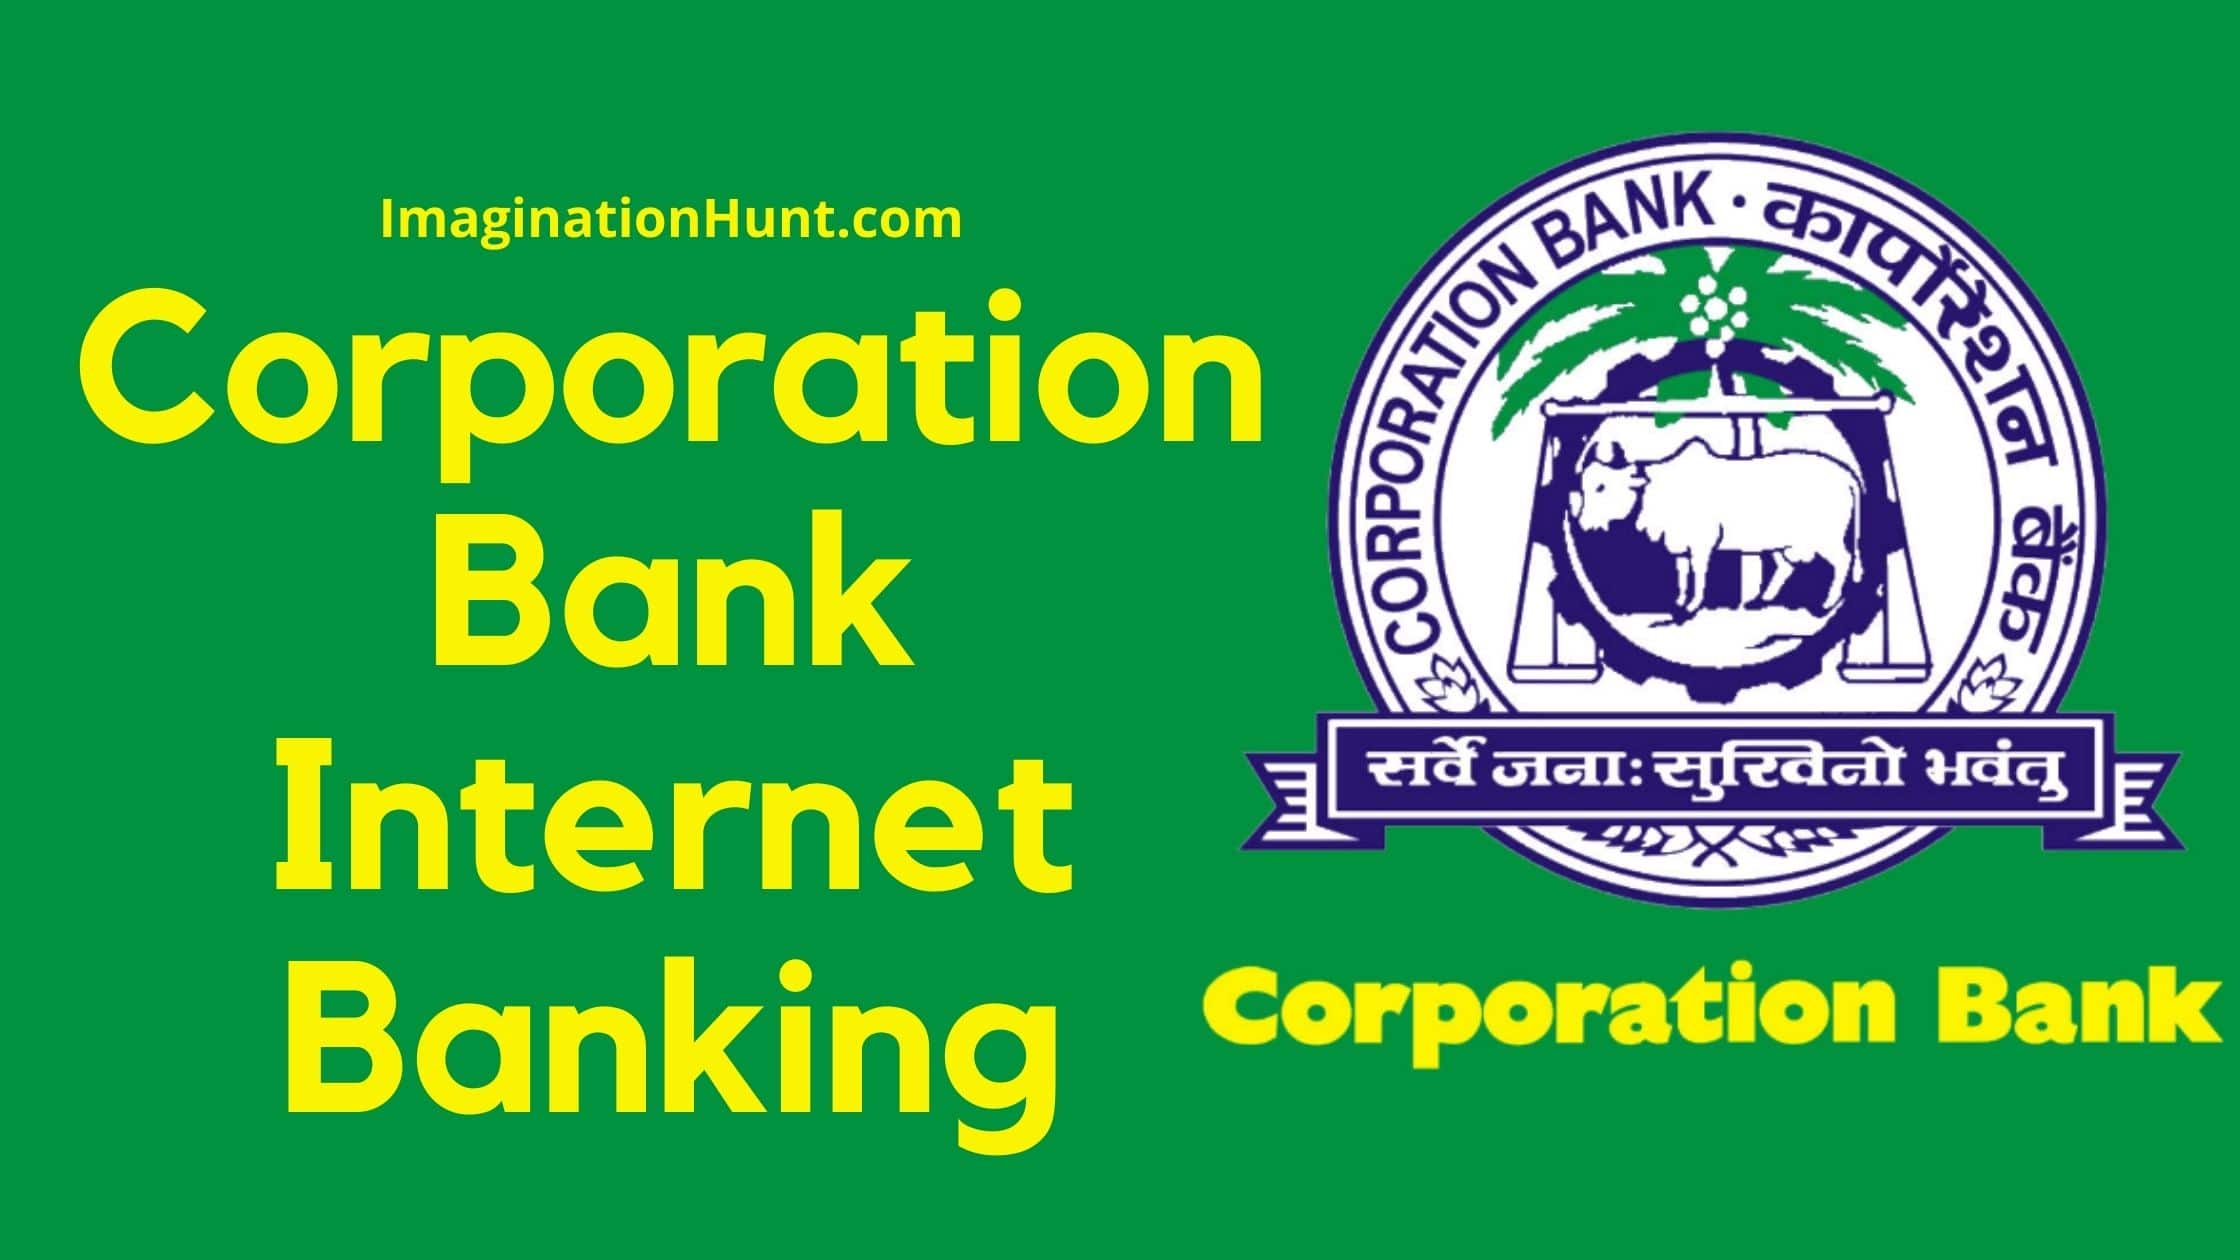 Corporation Bank Internet Banking